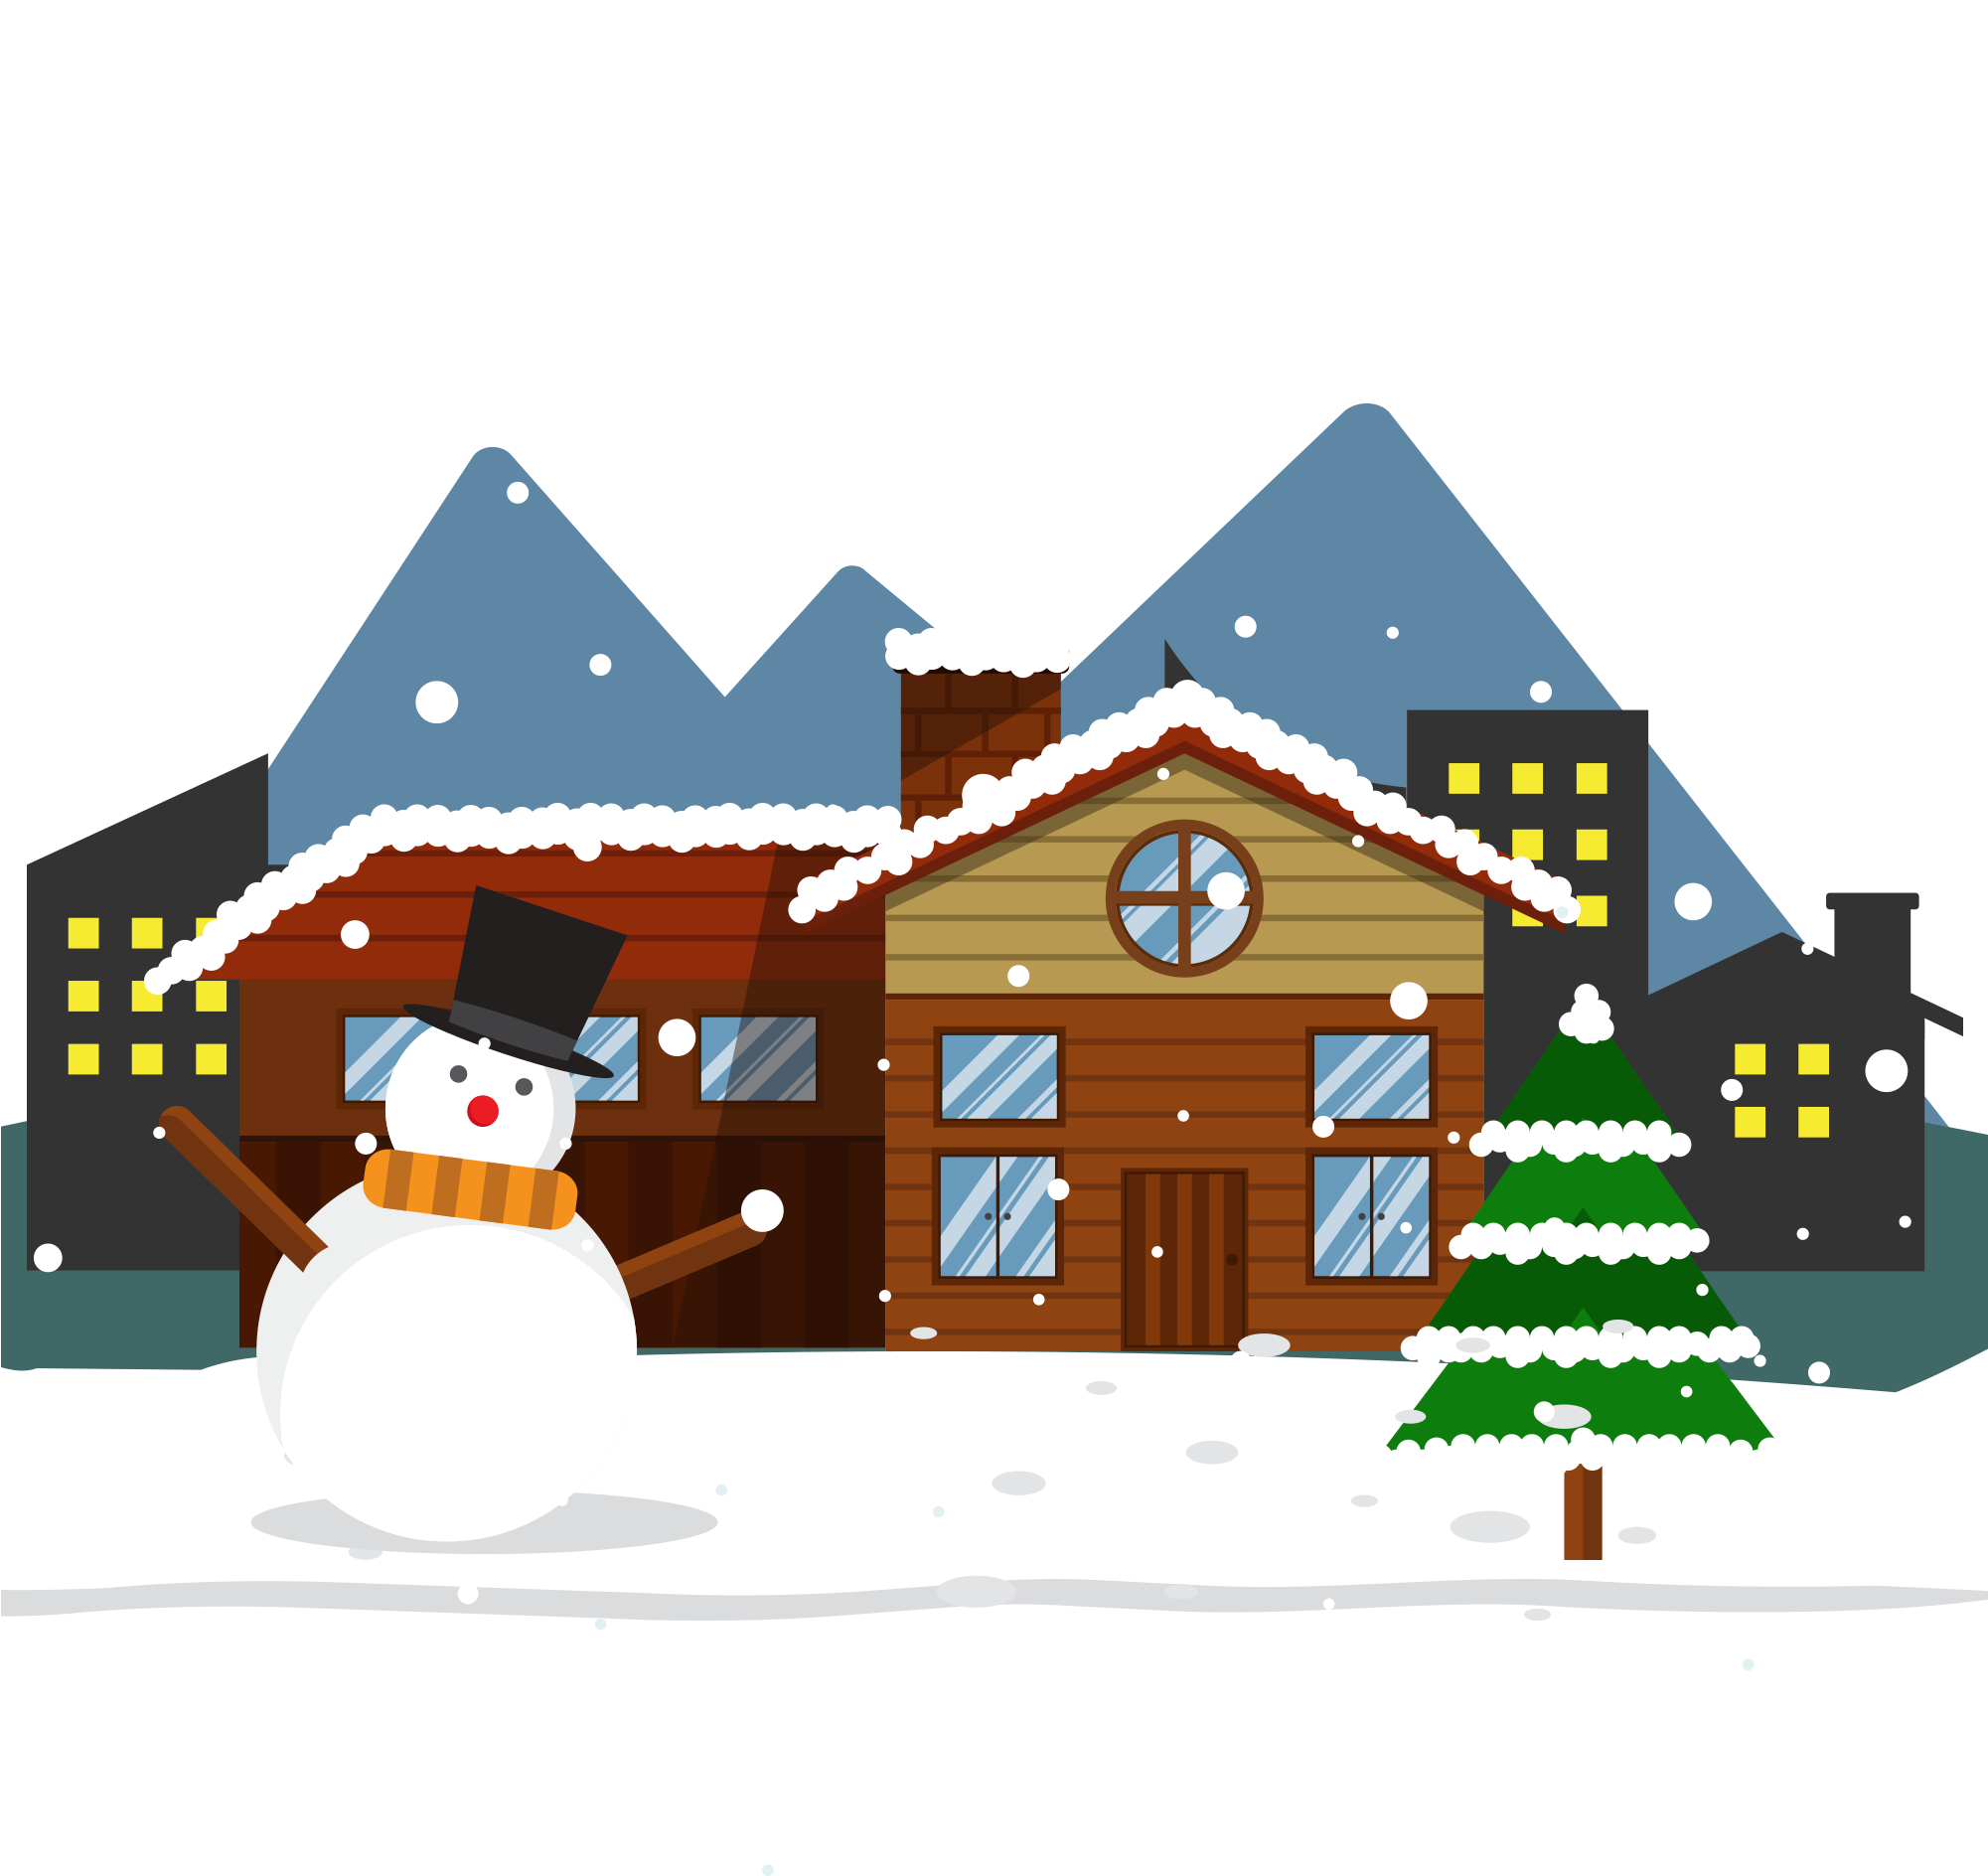 A Snowman And A House